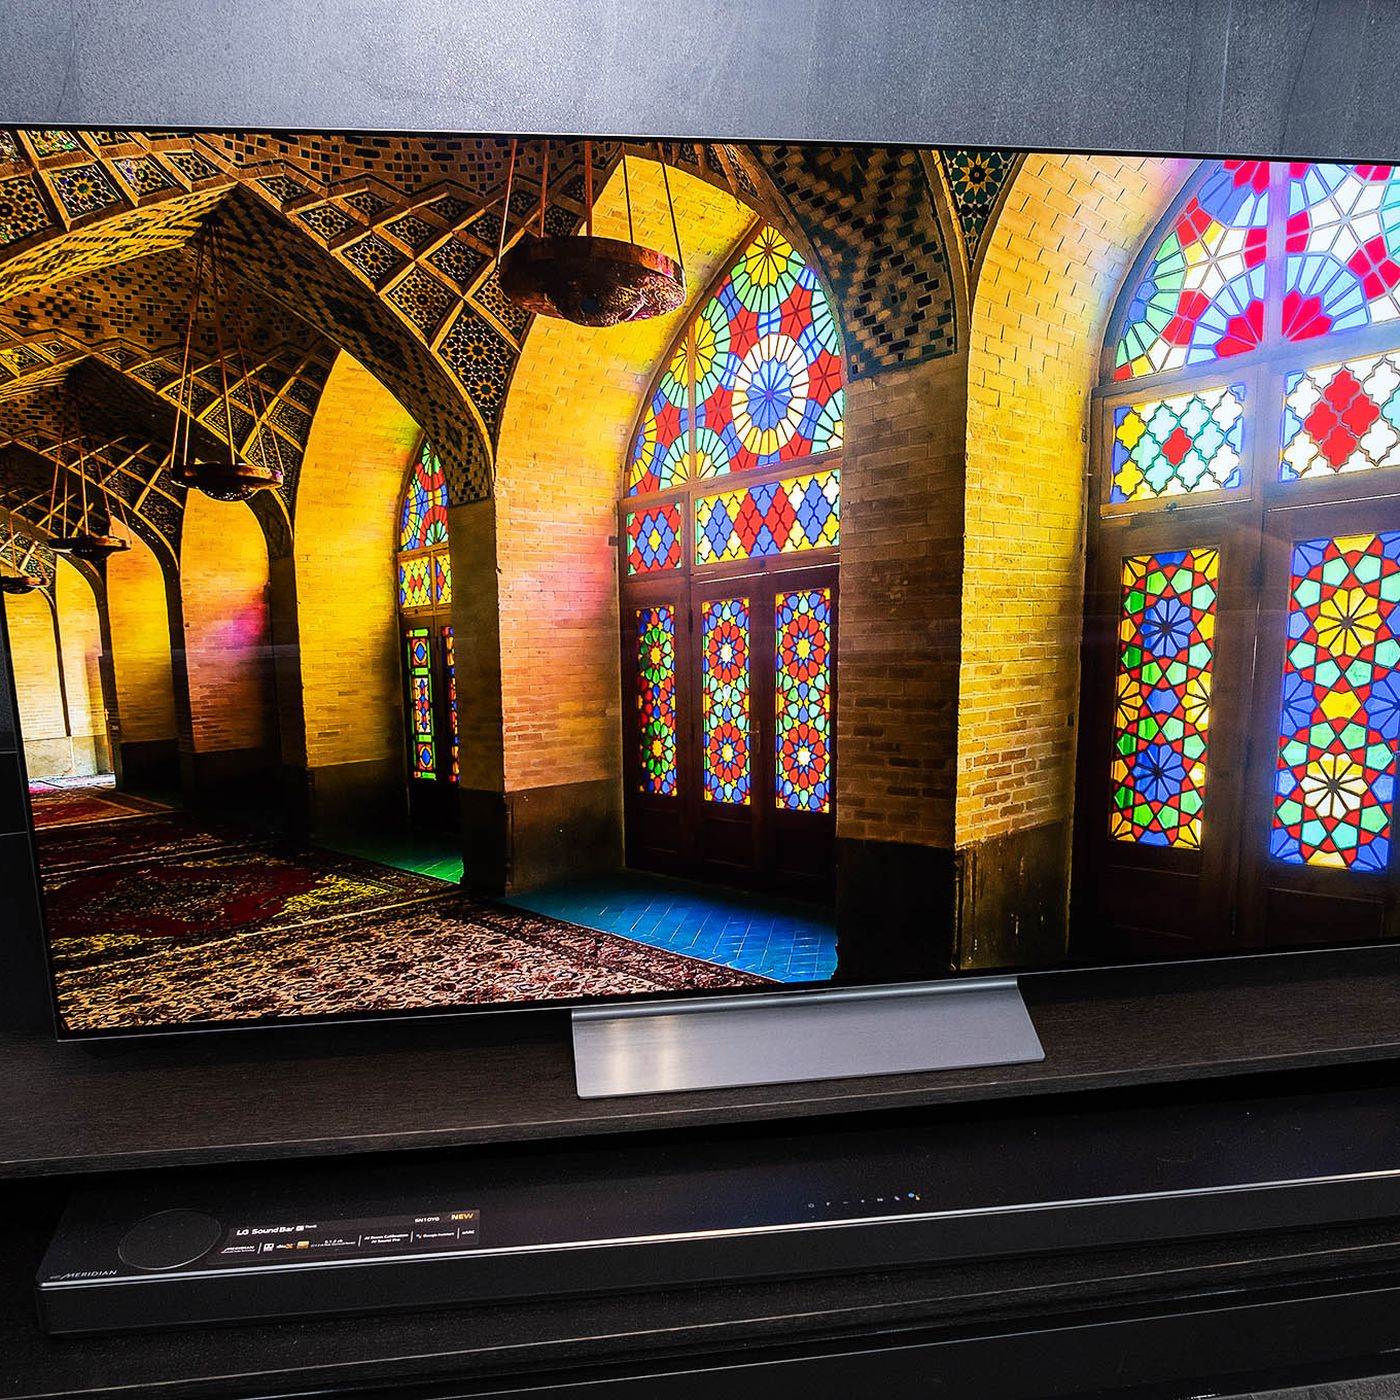 theverge.com - Cameron Faulkner - LG is price-slashing 2022 OLED TVs at Best Buy